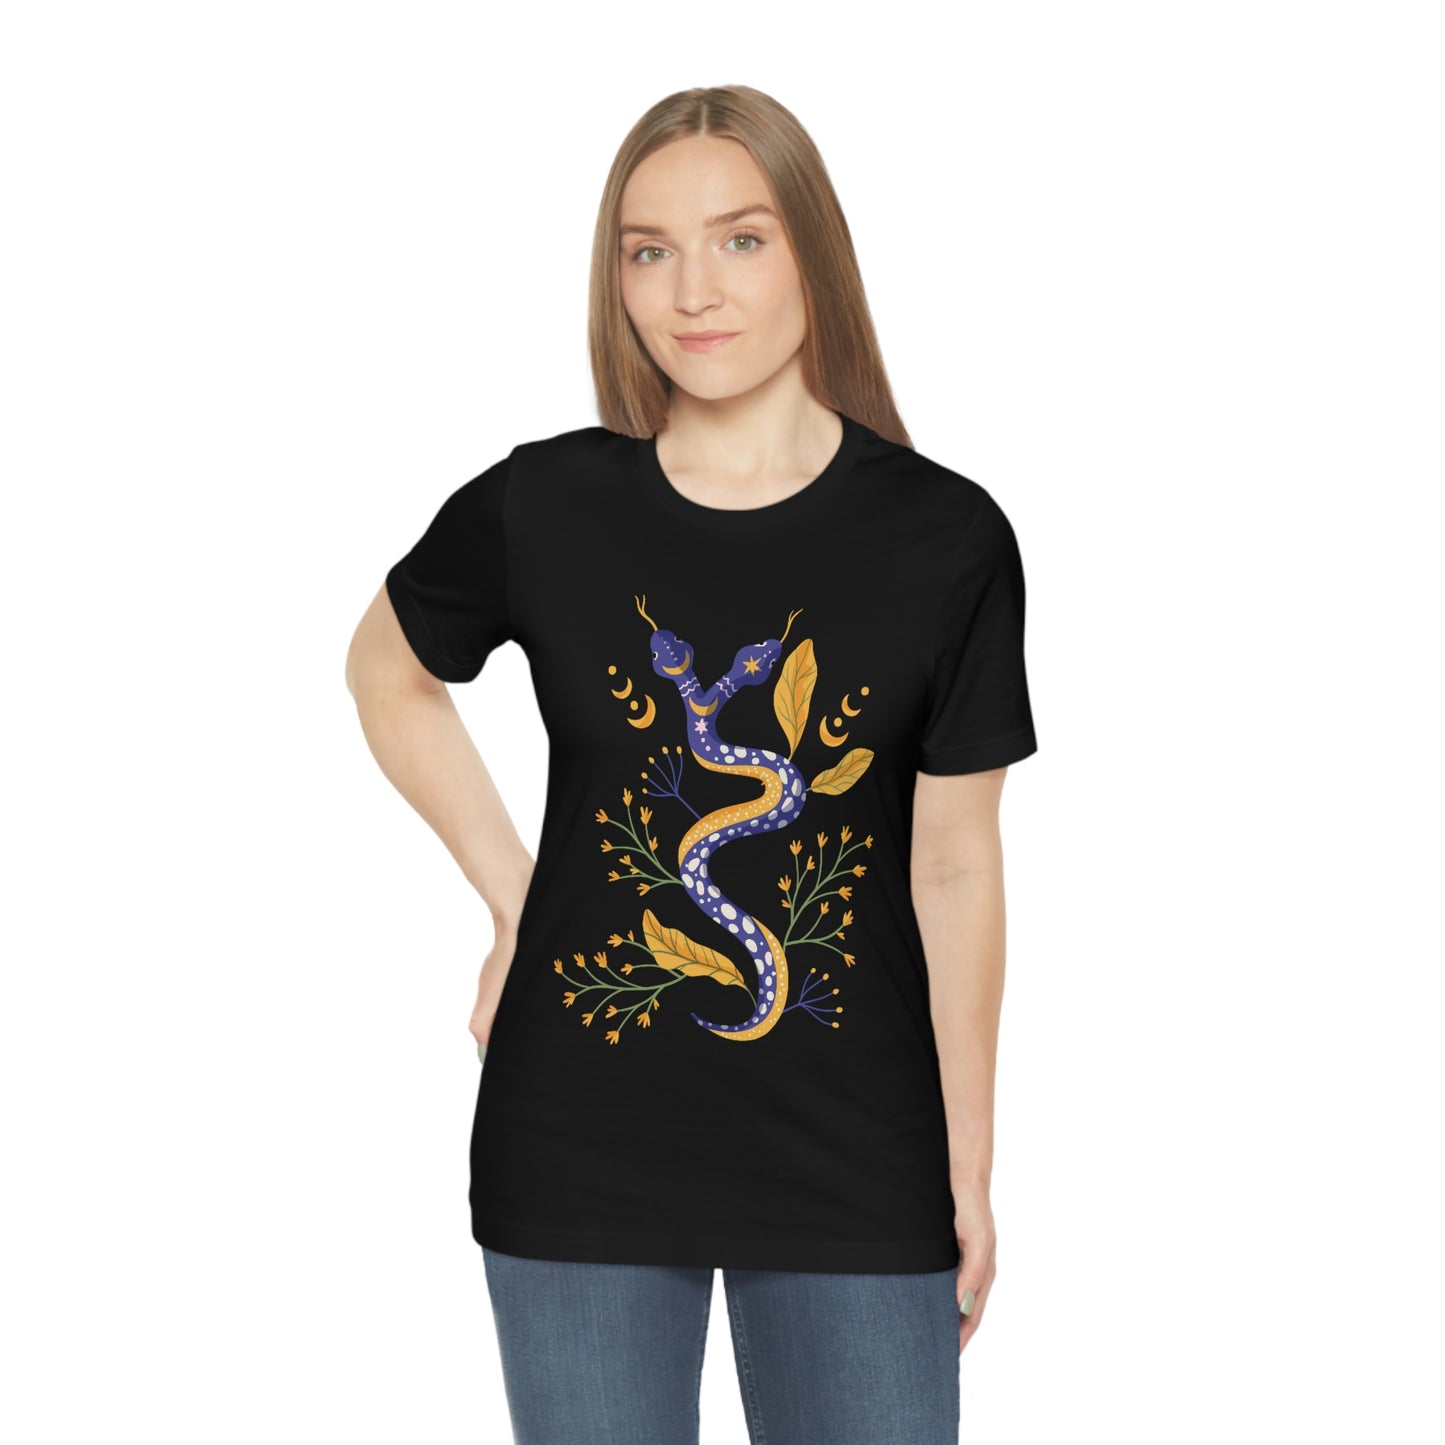 Double-Headed Snake, Moon Phases, Flowers, Black T-Shirt, Unisex Jersey Short Sleeve Tee